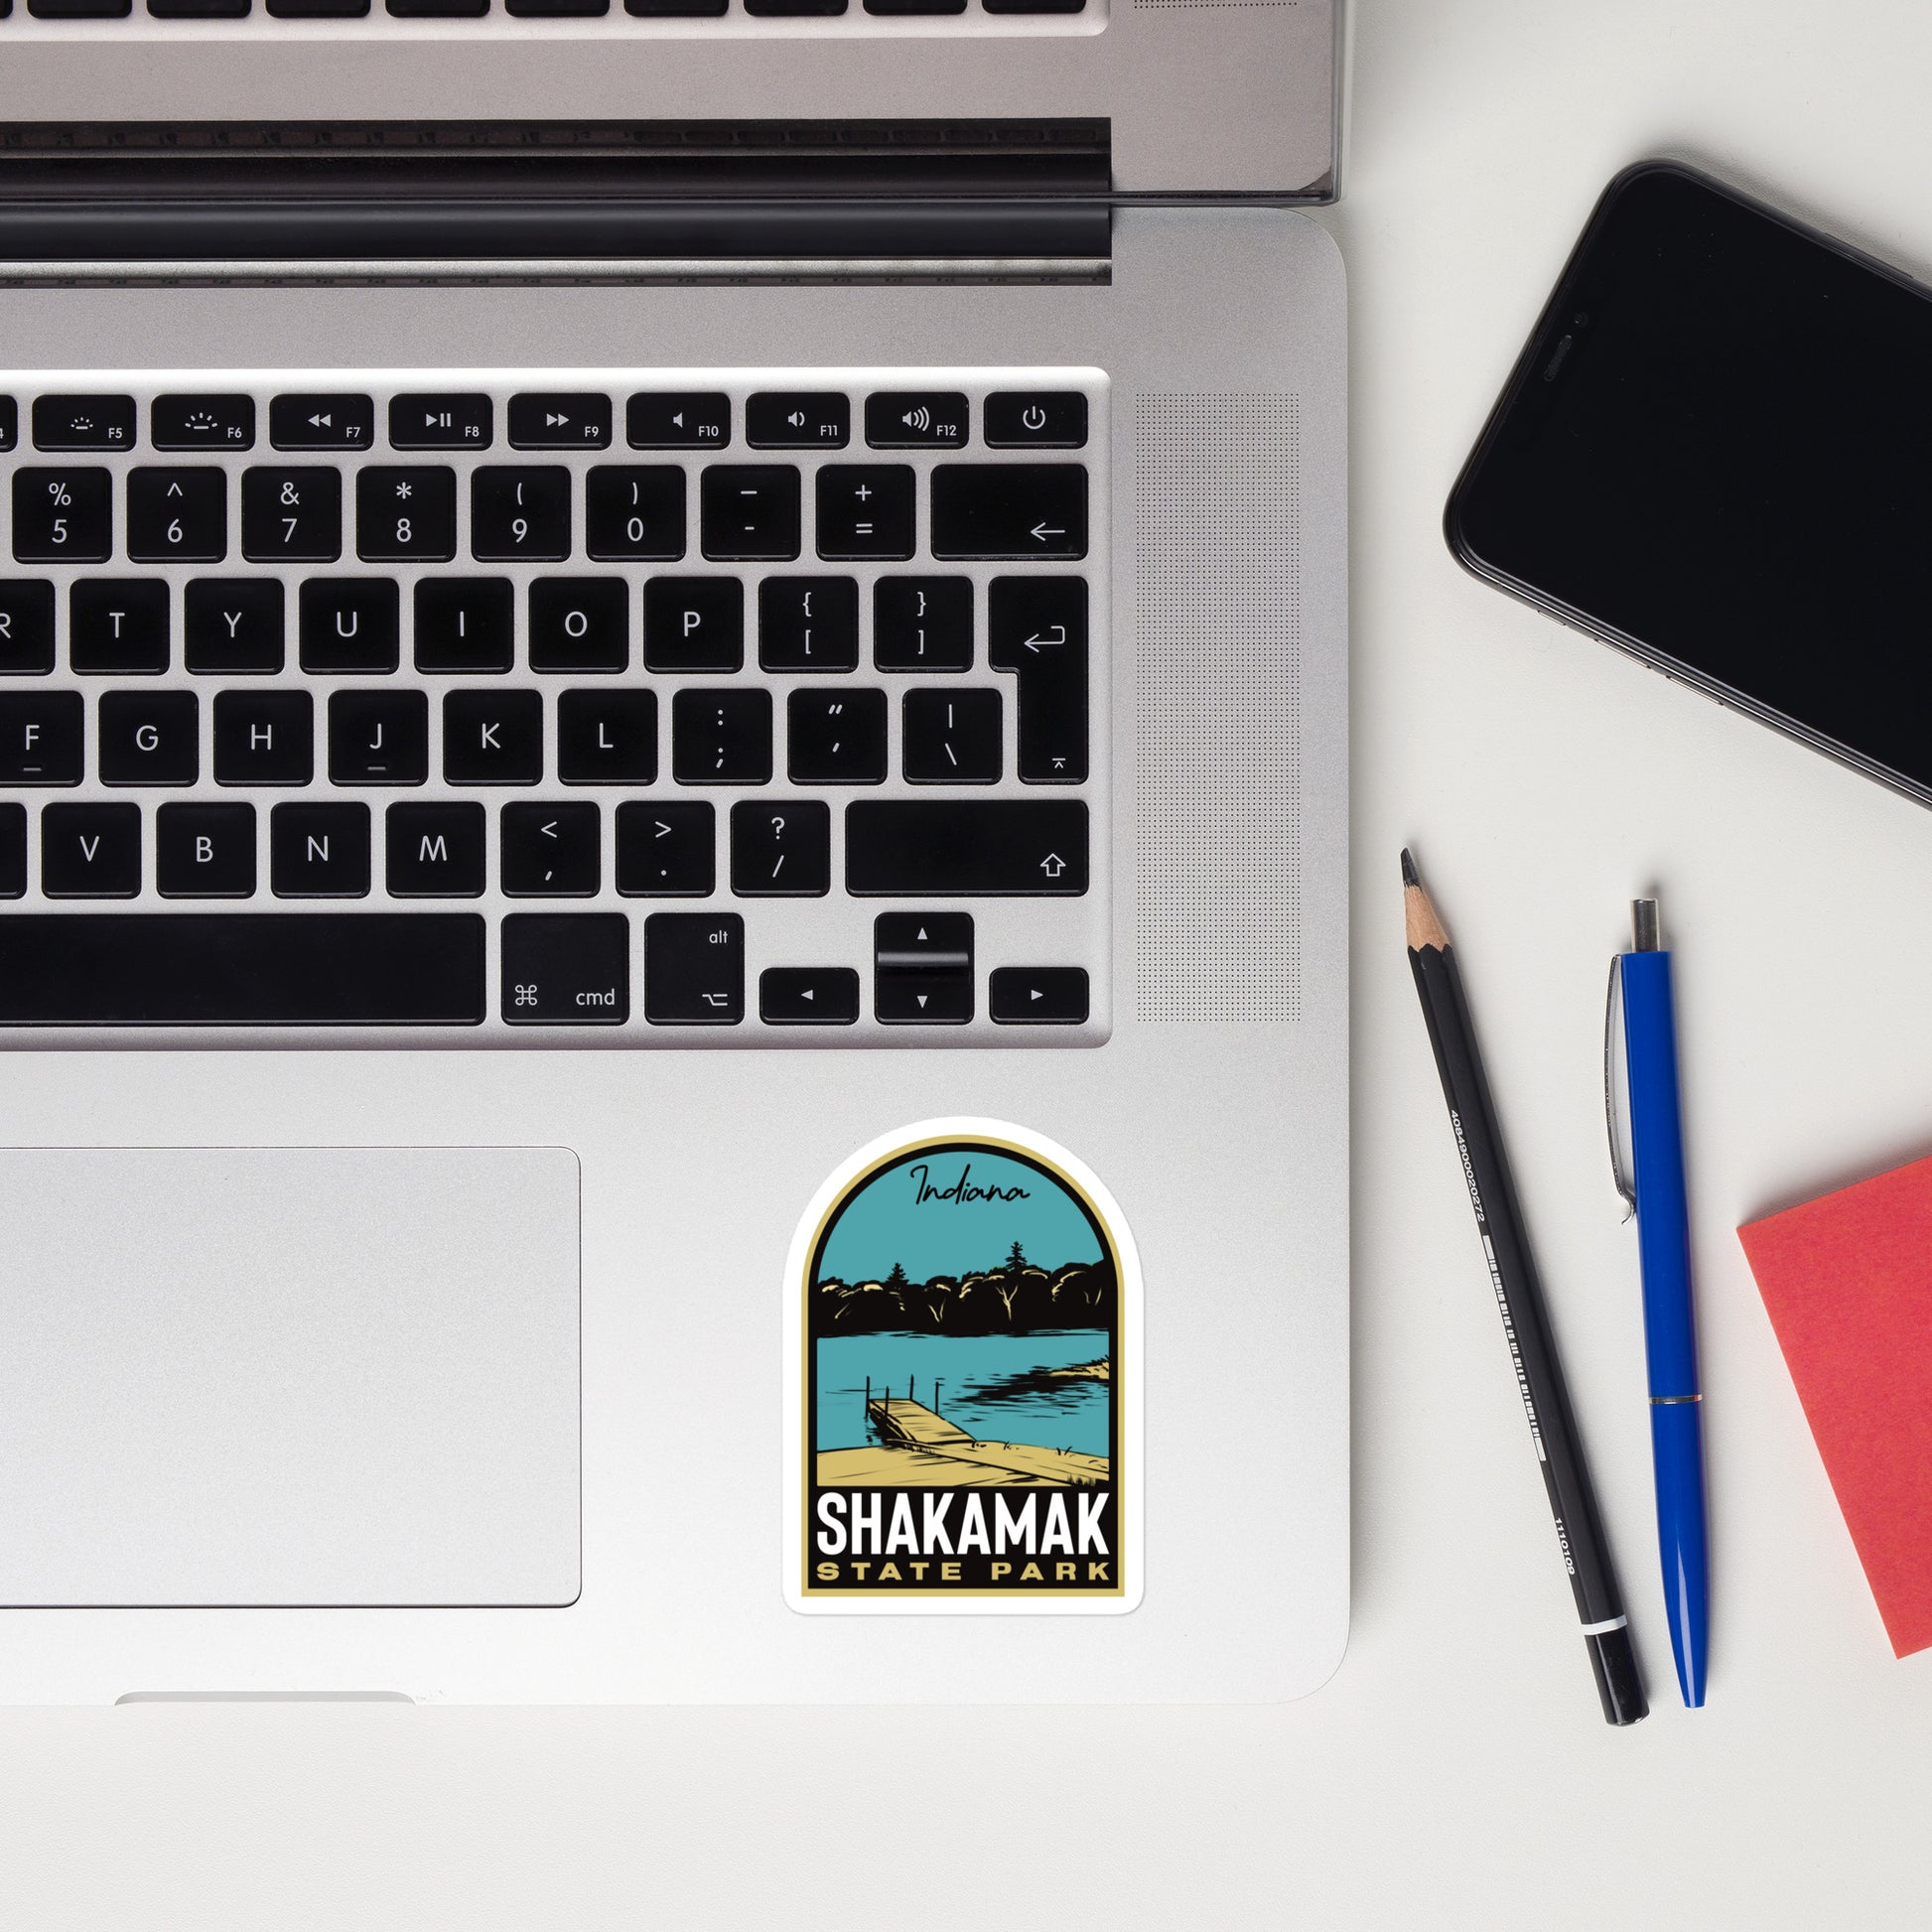 A sticker of Shakamak State Park on a laptop